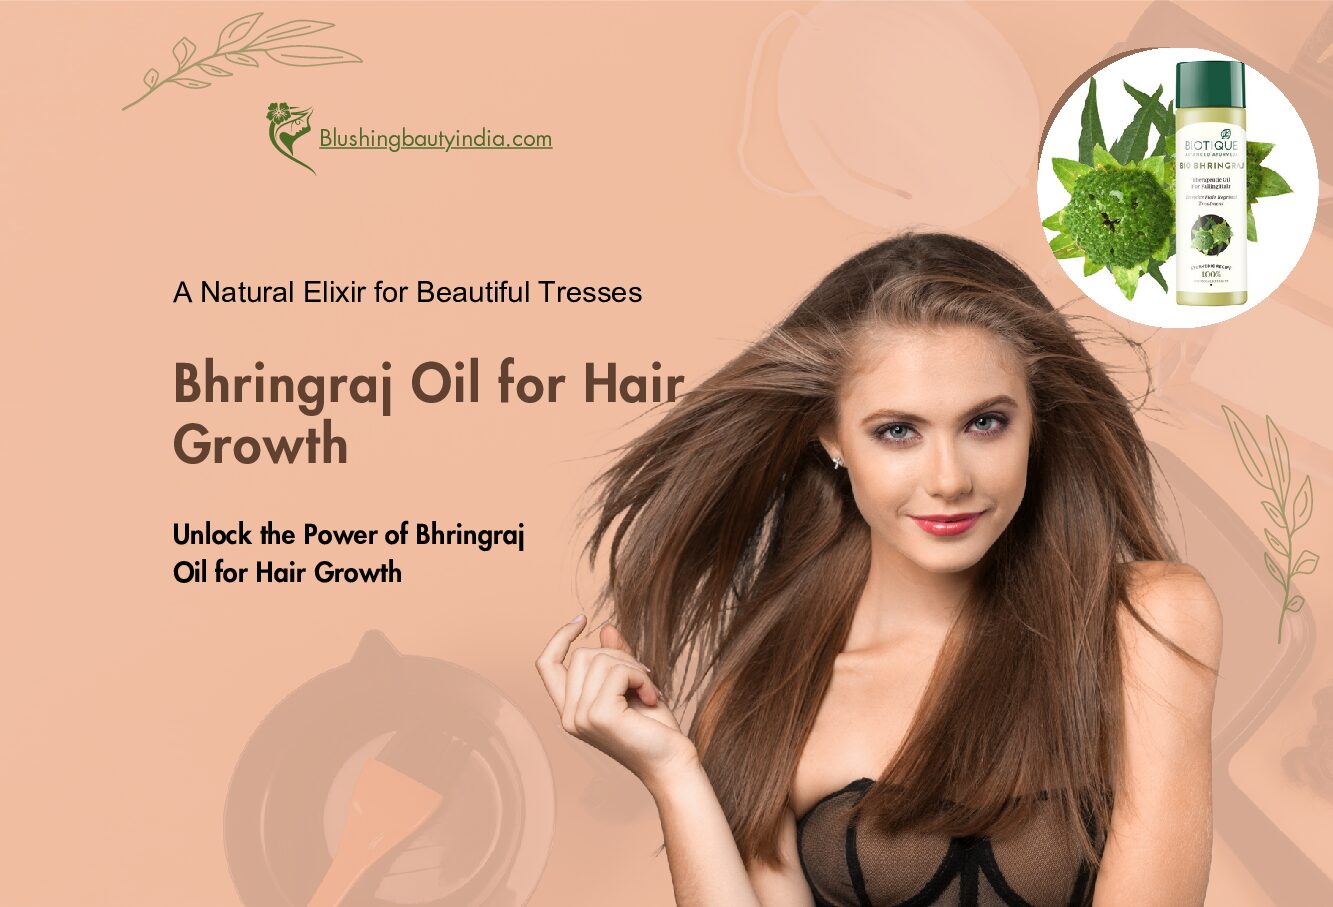 Bhringraj Oil for Hair Growth pdf